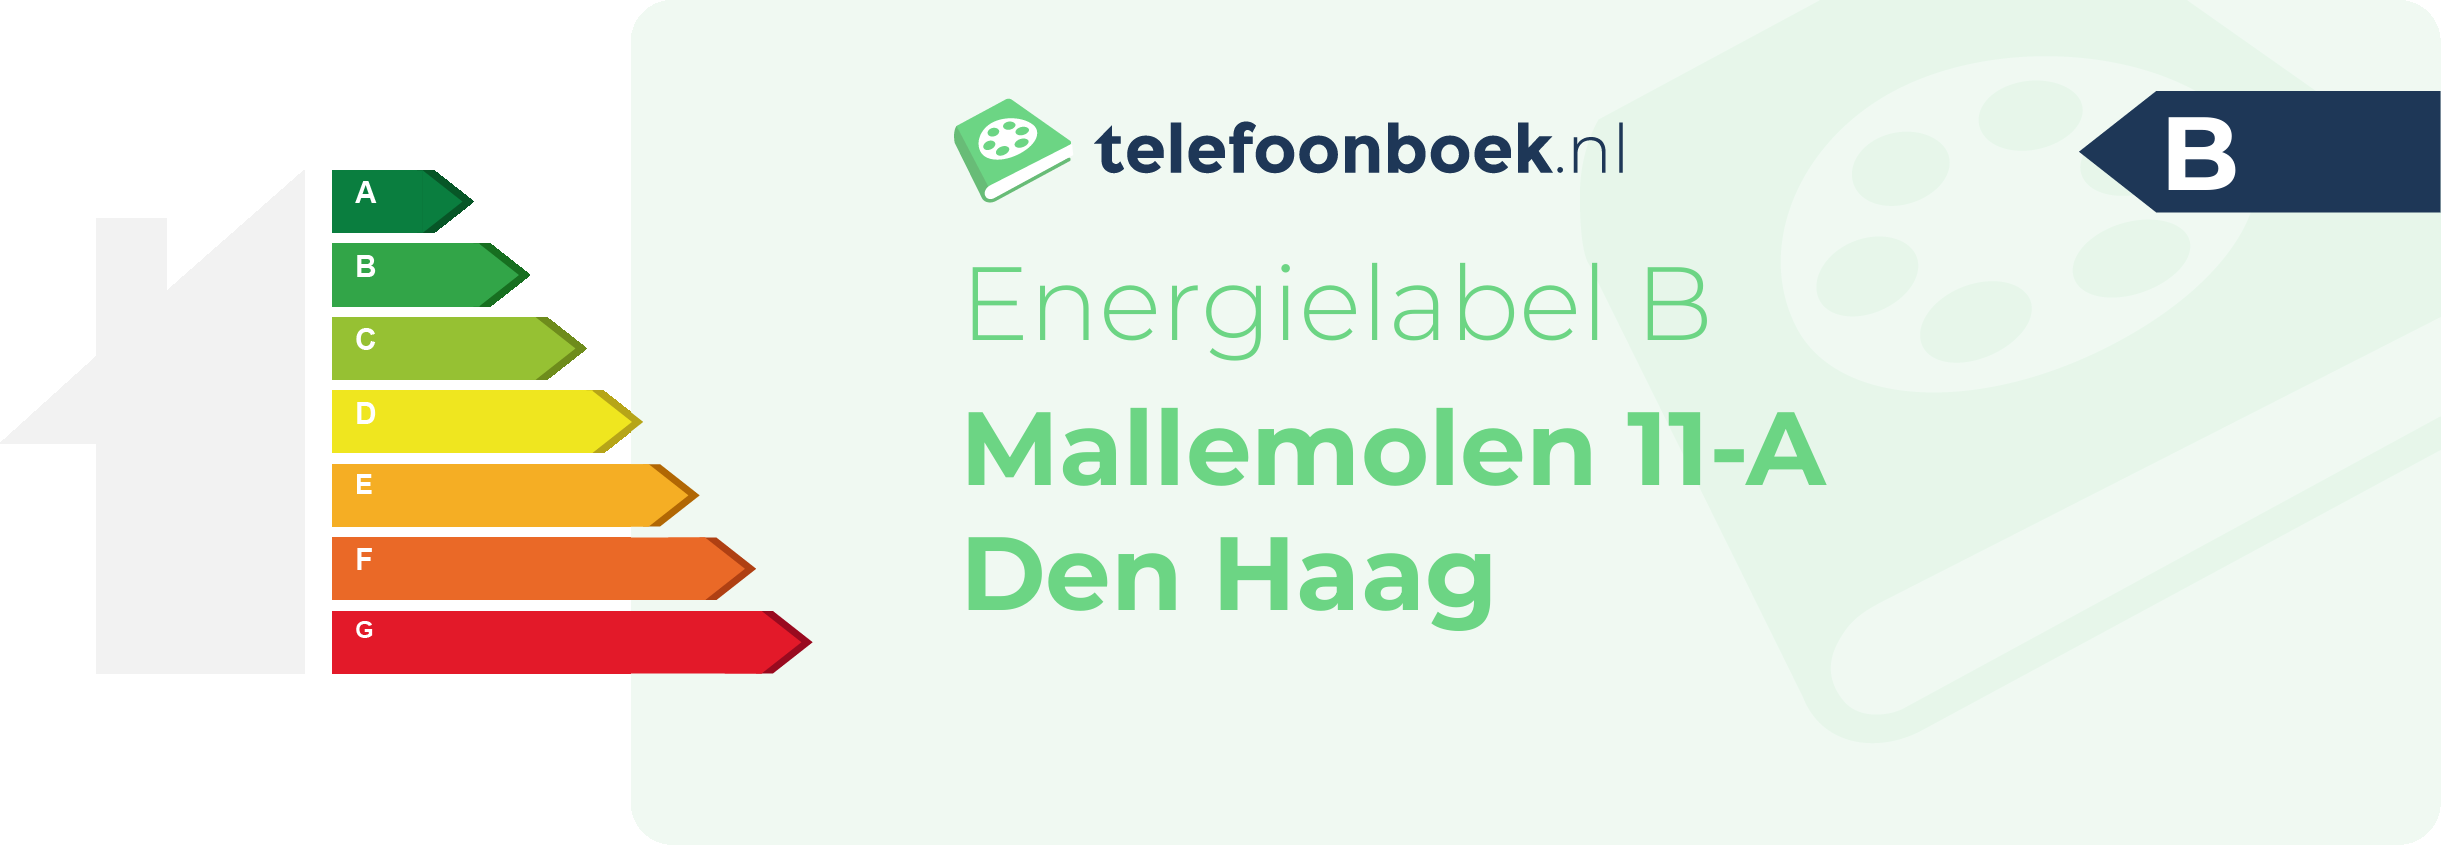 Energielabel Mallemolen 11-A Den Haag